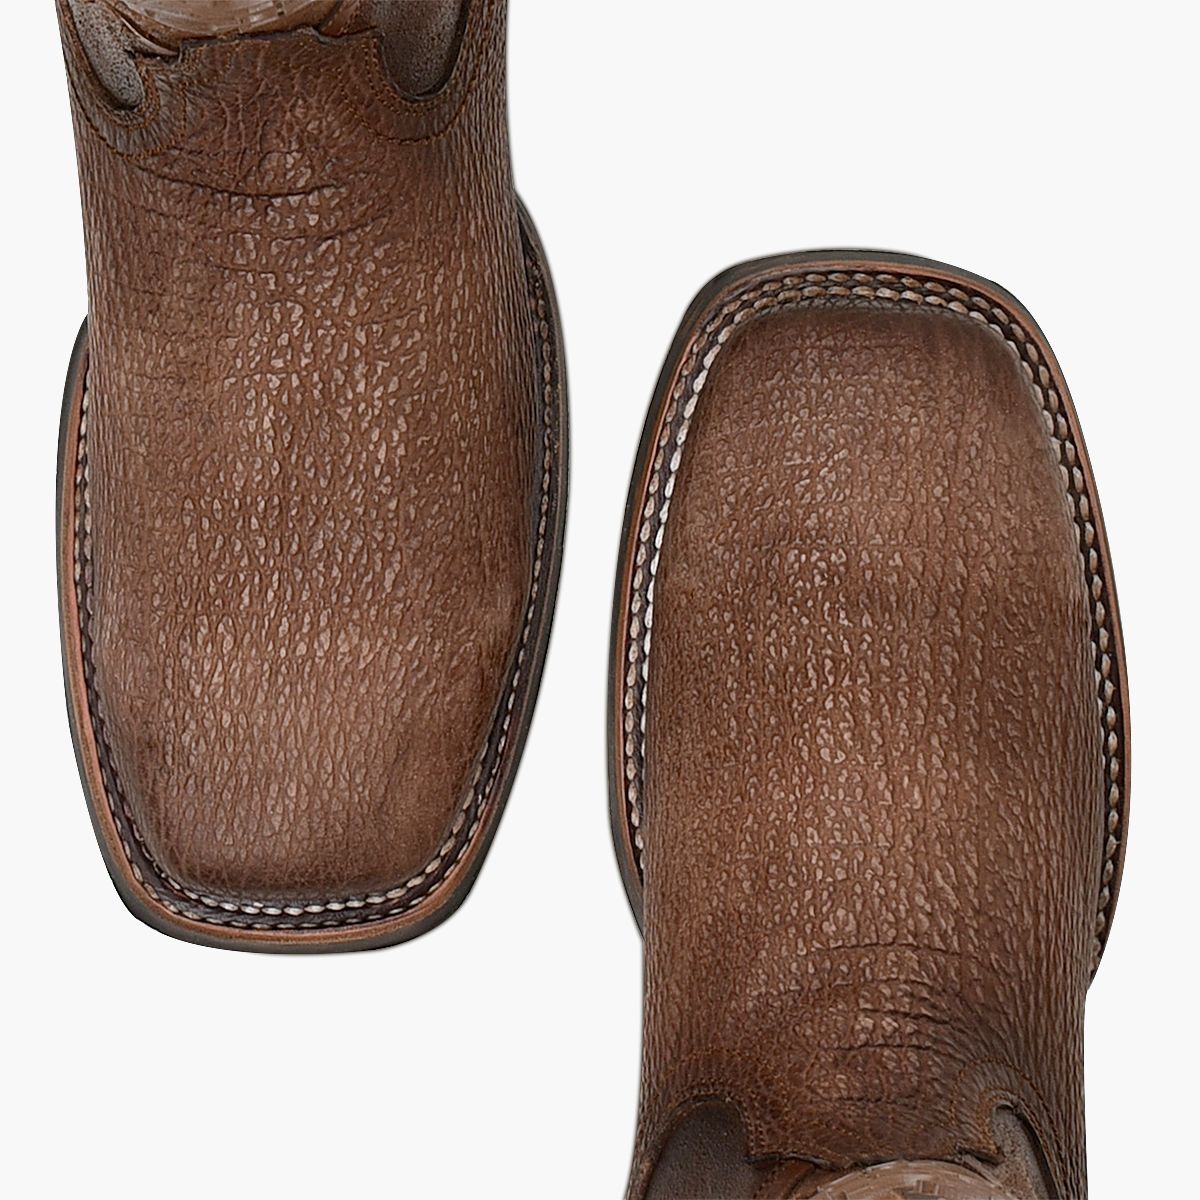 4L02TI - Cuadra brown cowboy western elephant boots for men-CUADRA-Kuet-Cuadra-Boots